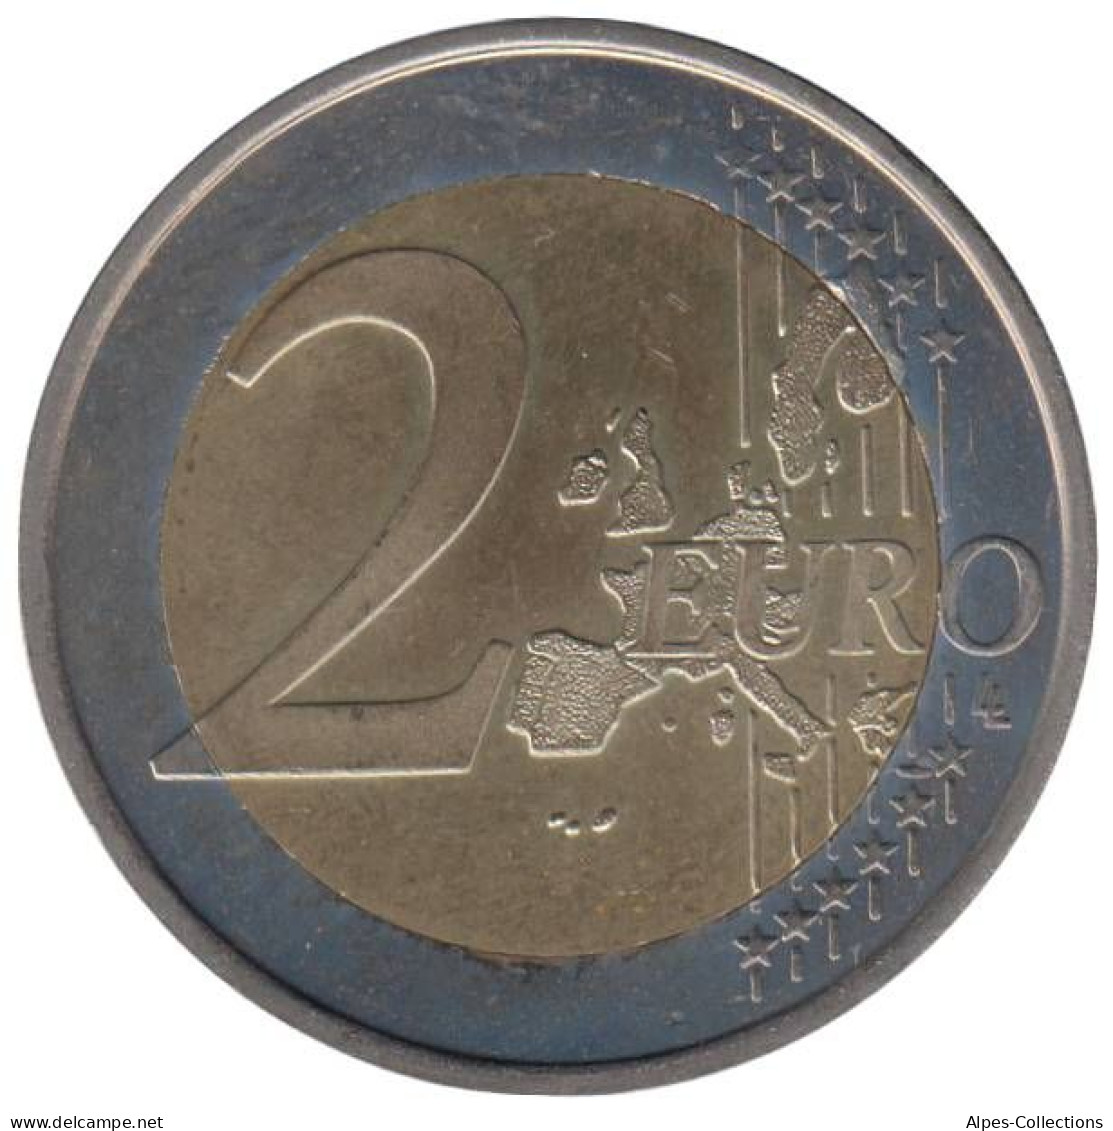 LU20005.2 - LUXEMBOURG - 2 Euros - 2005 - Luxemburgo